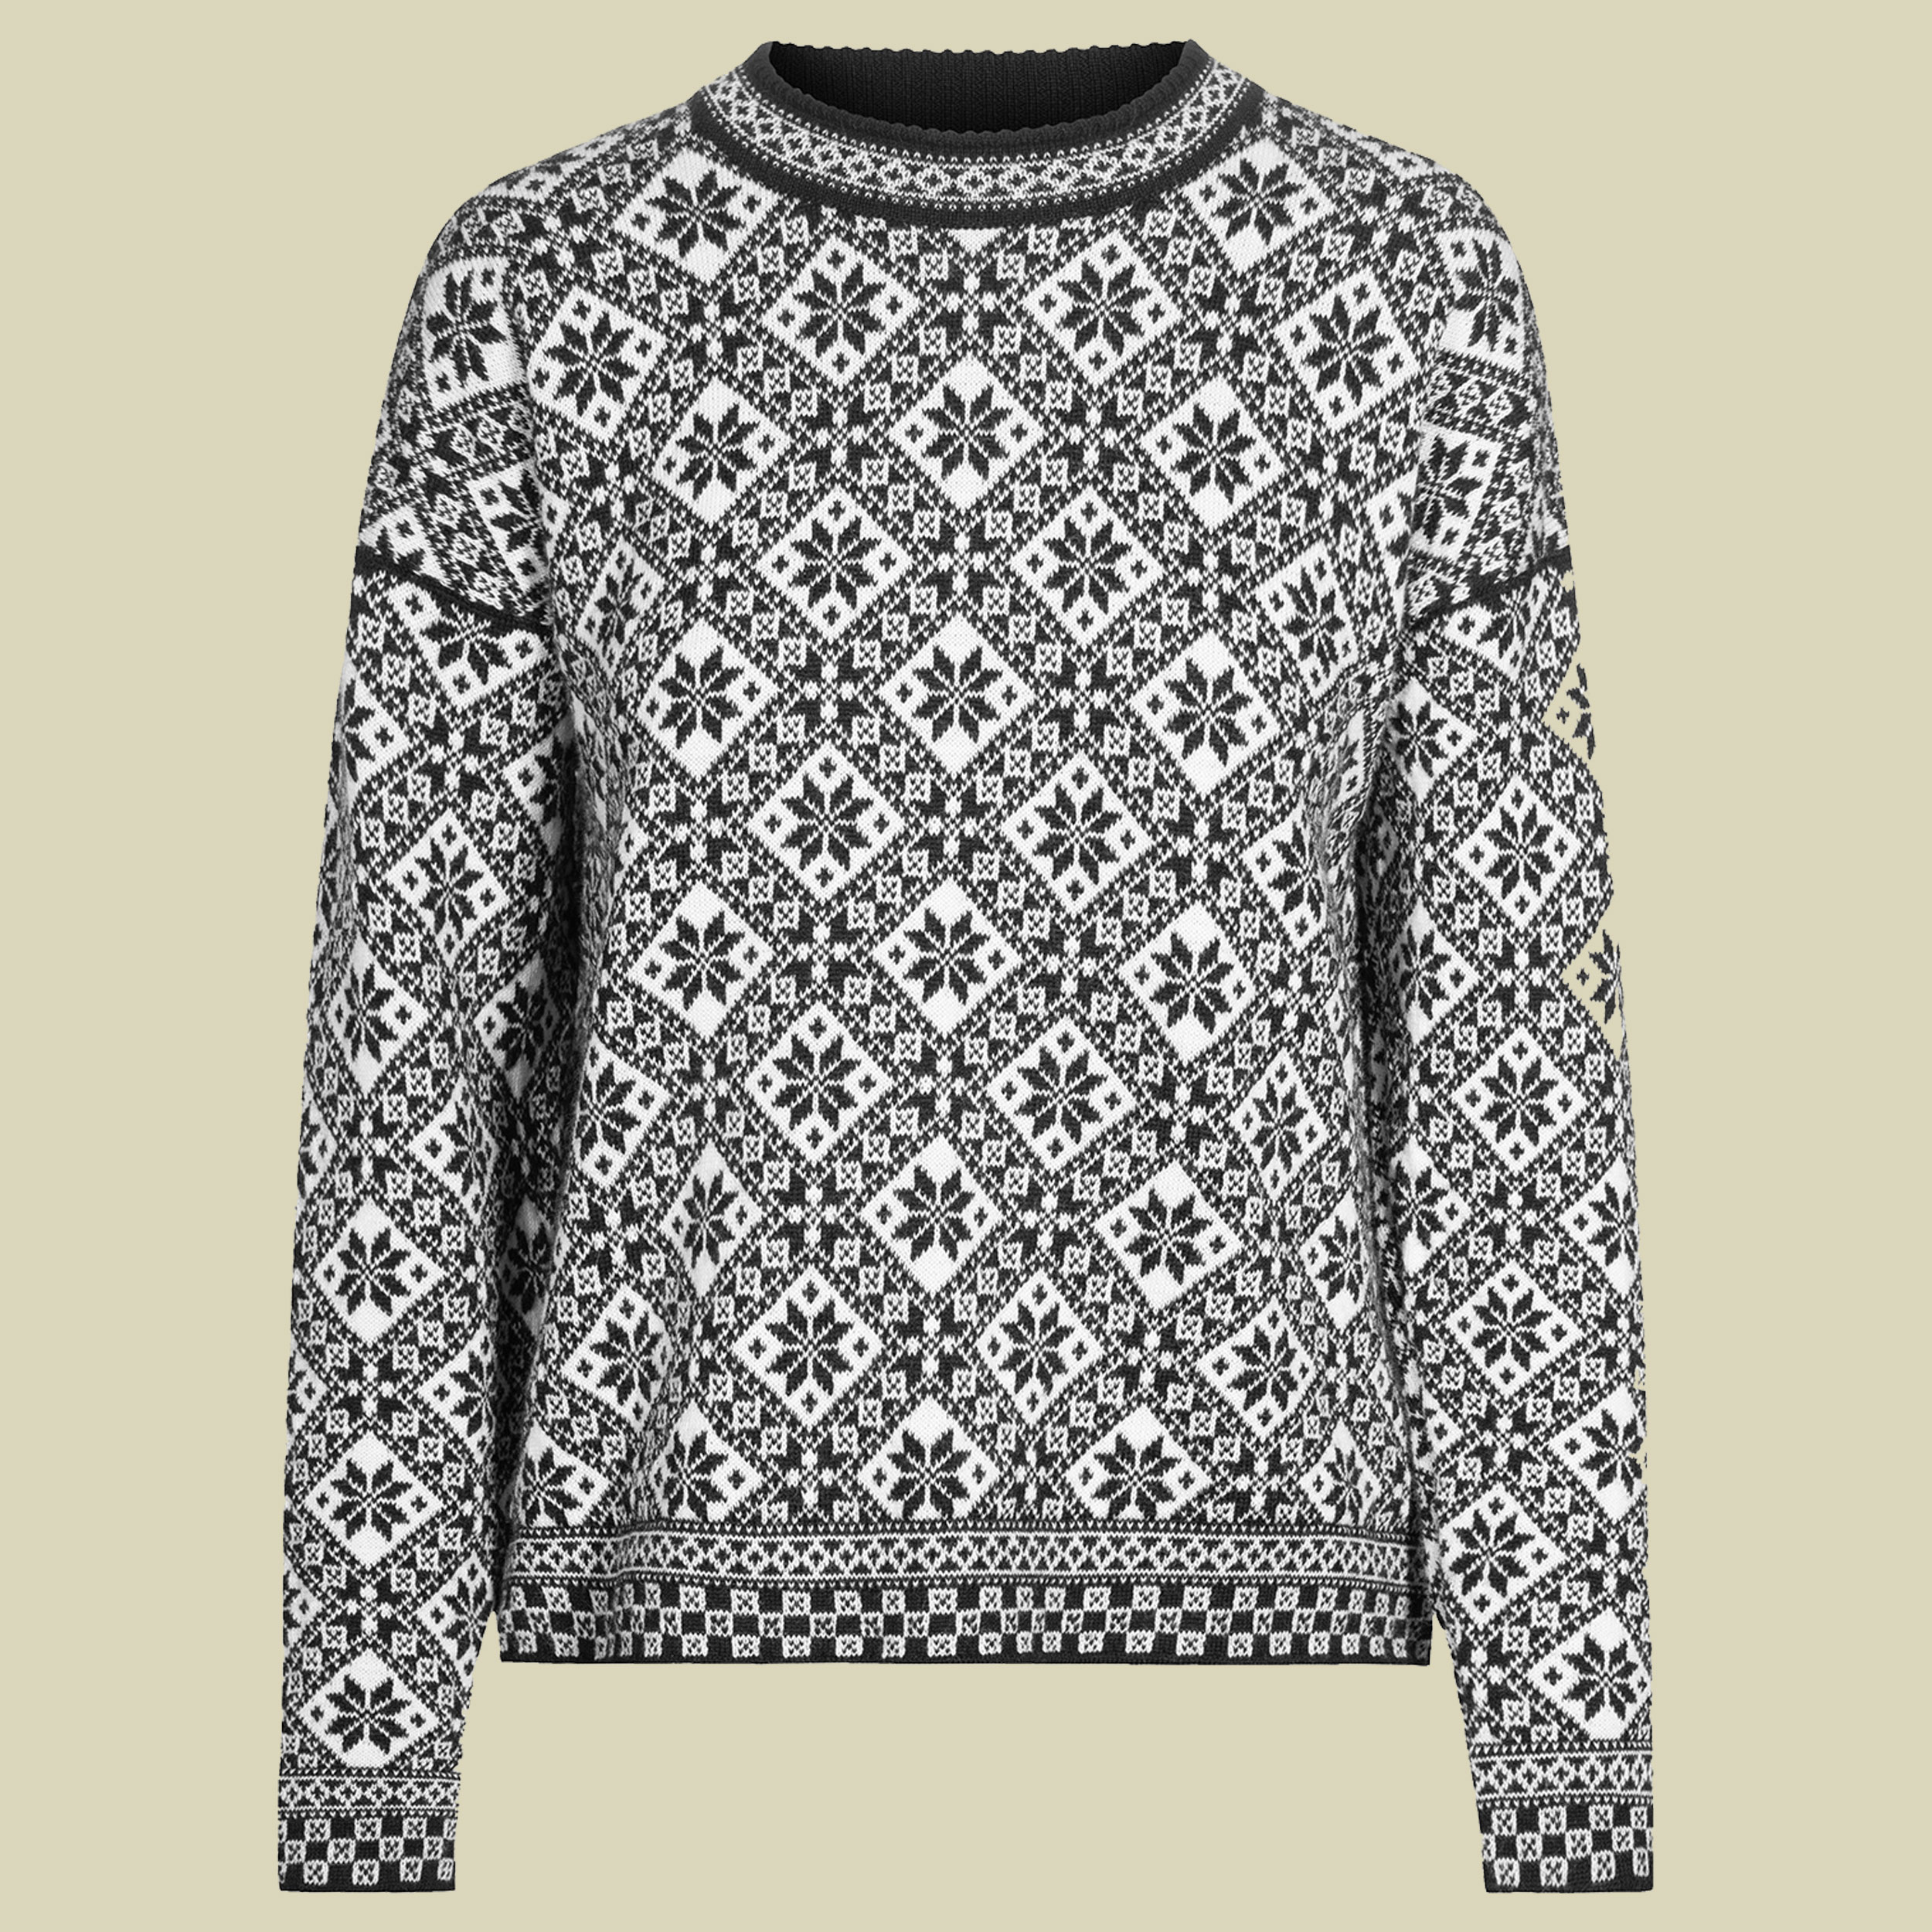 Bjoroy Sweater Women Größe S Farbe black/off white/raspberry